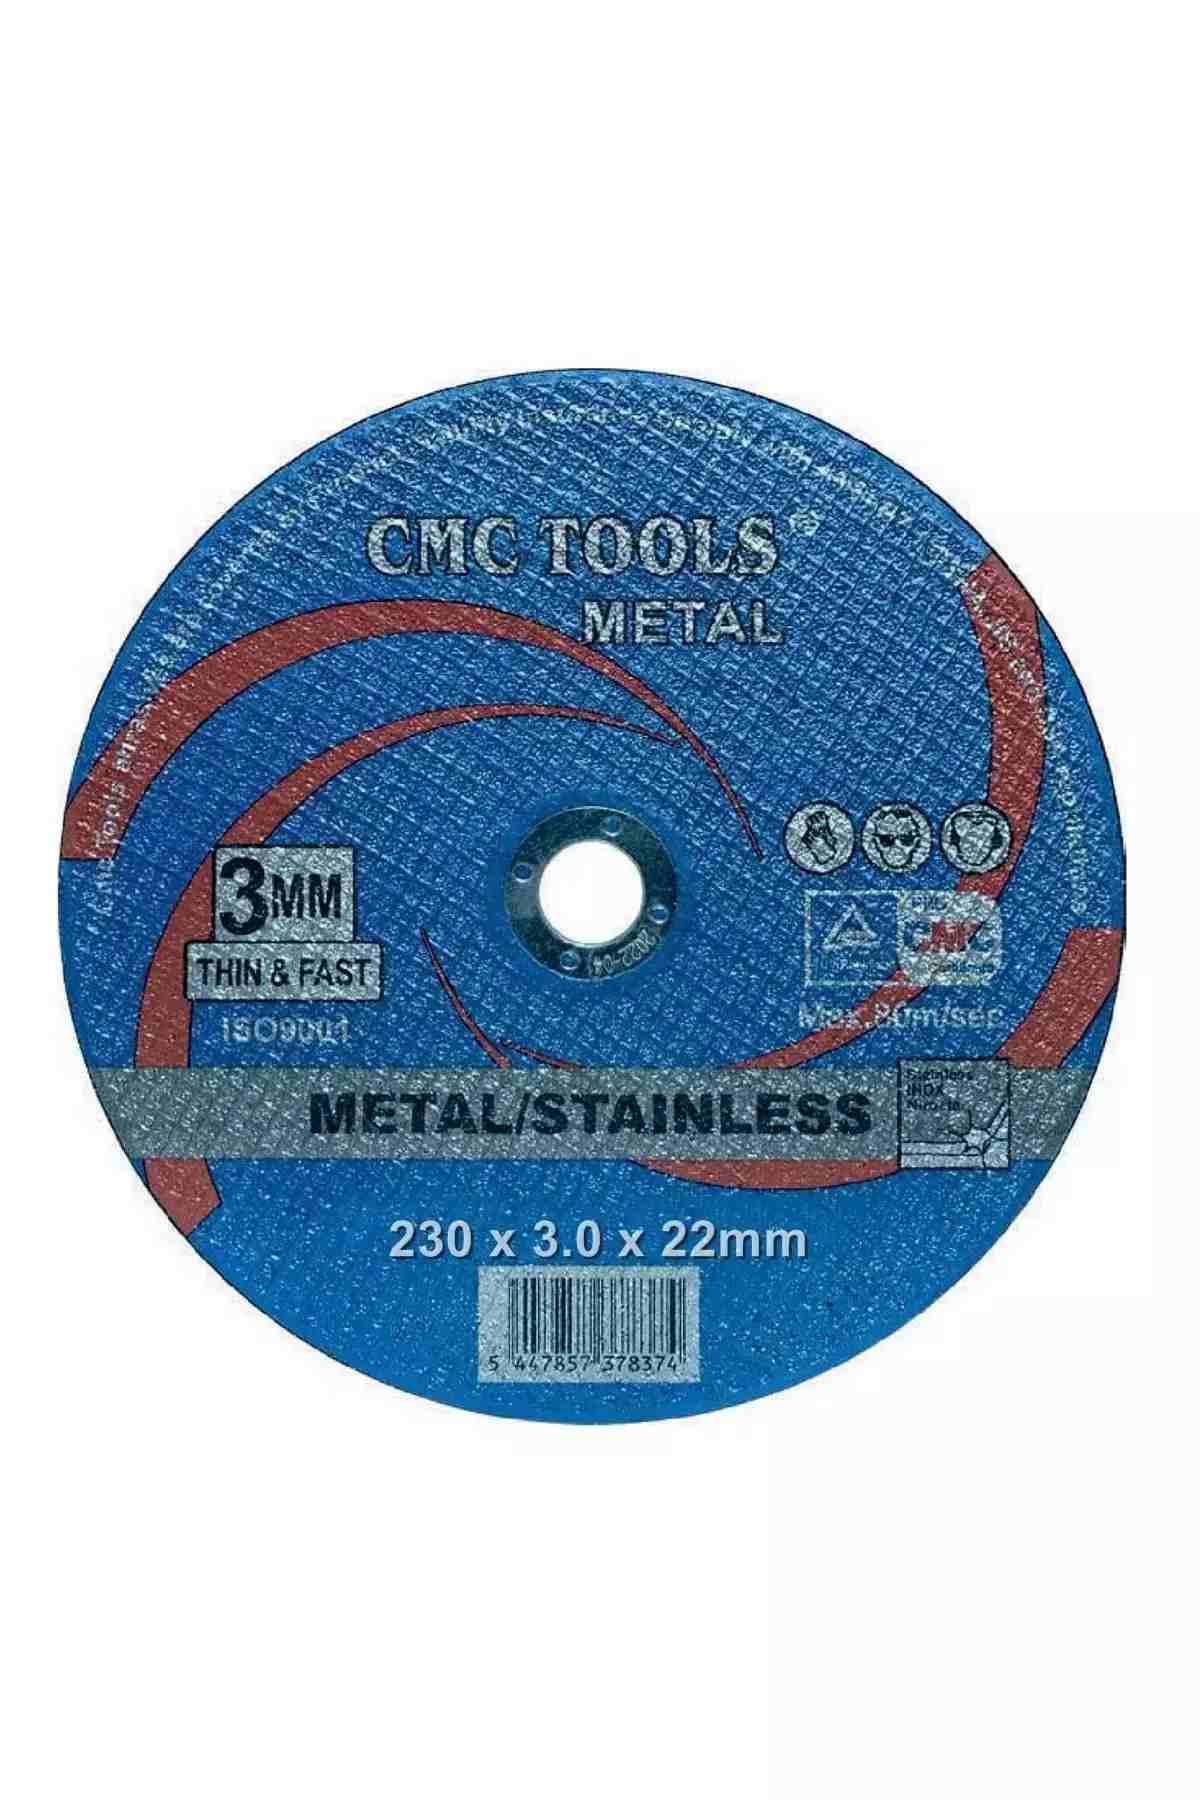 Cmc Tools Metal Kesici Taş Spiral Taşı